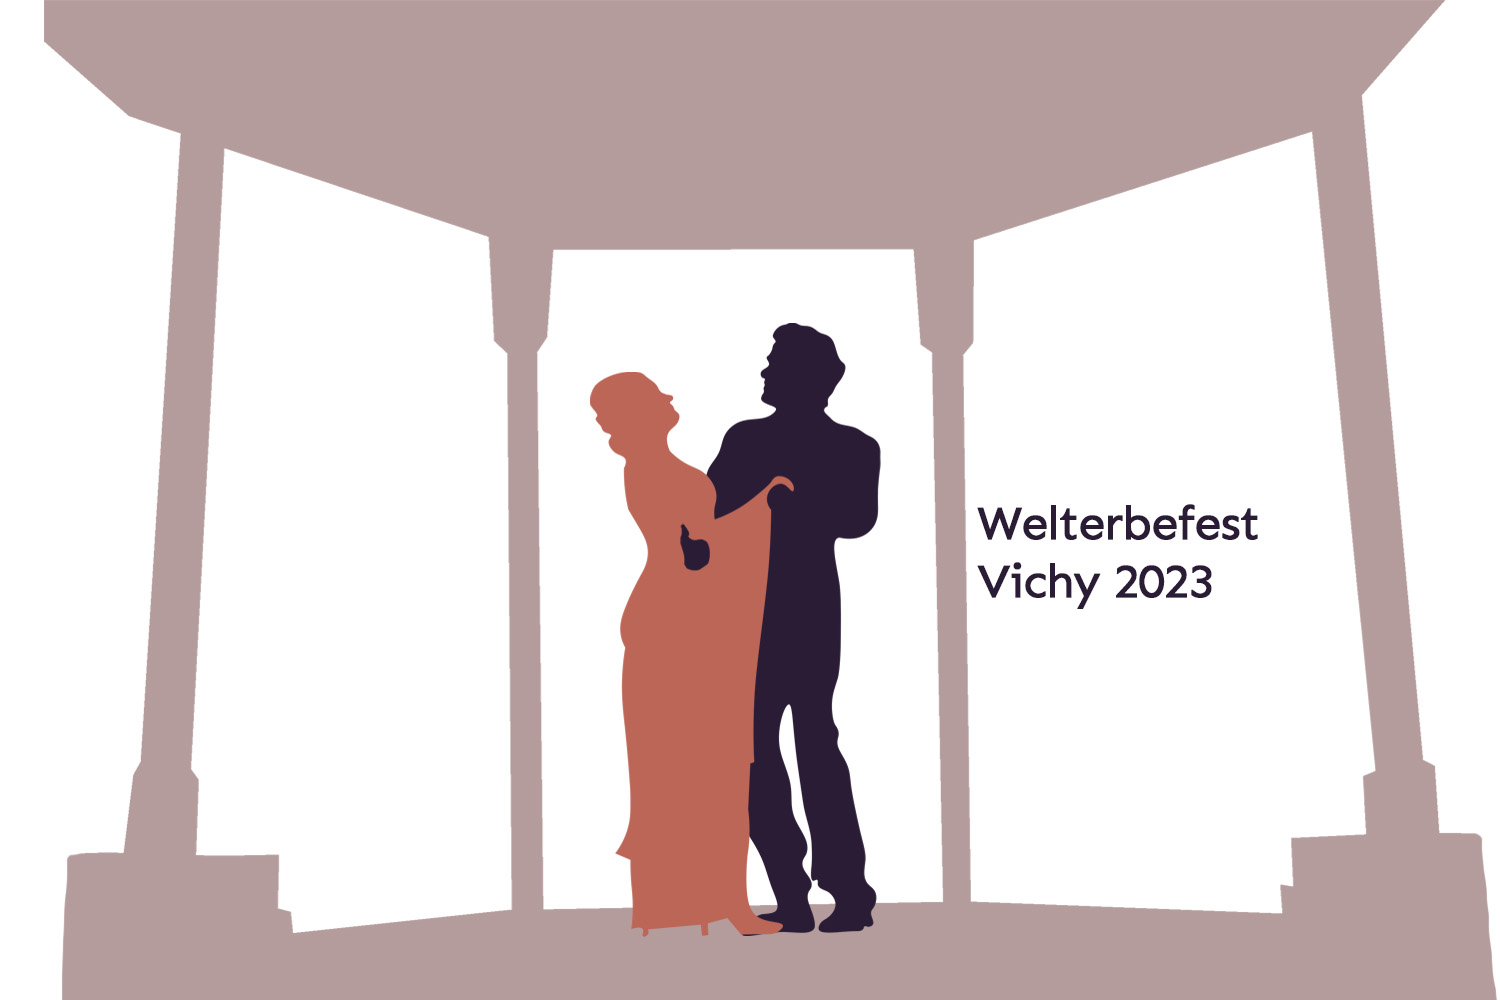 Welterbefest Vhichy 2023